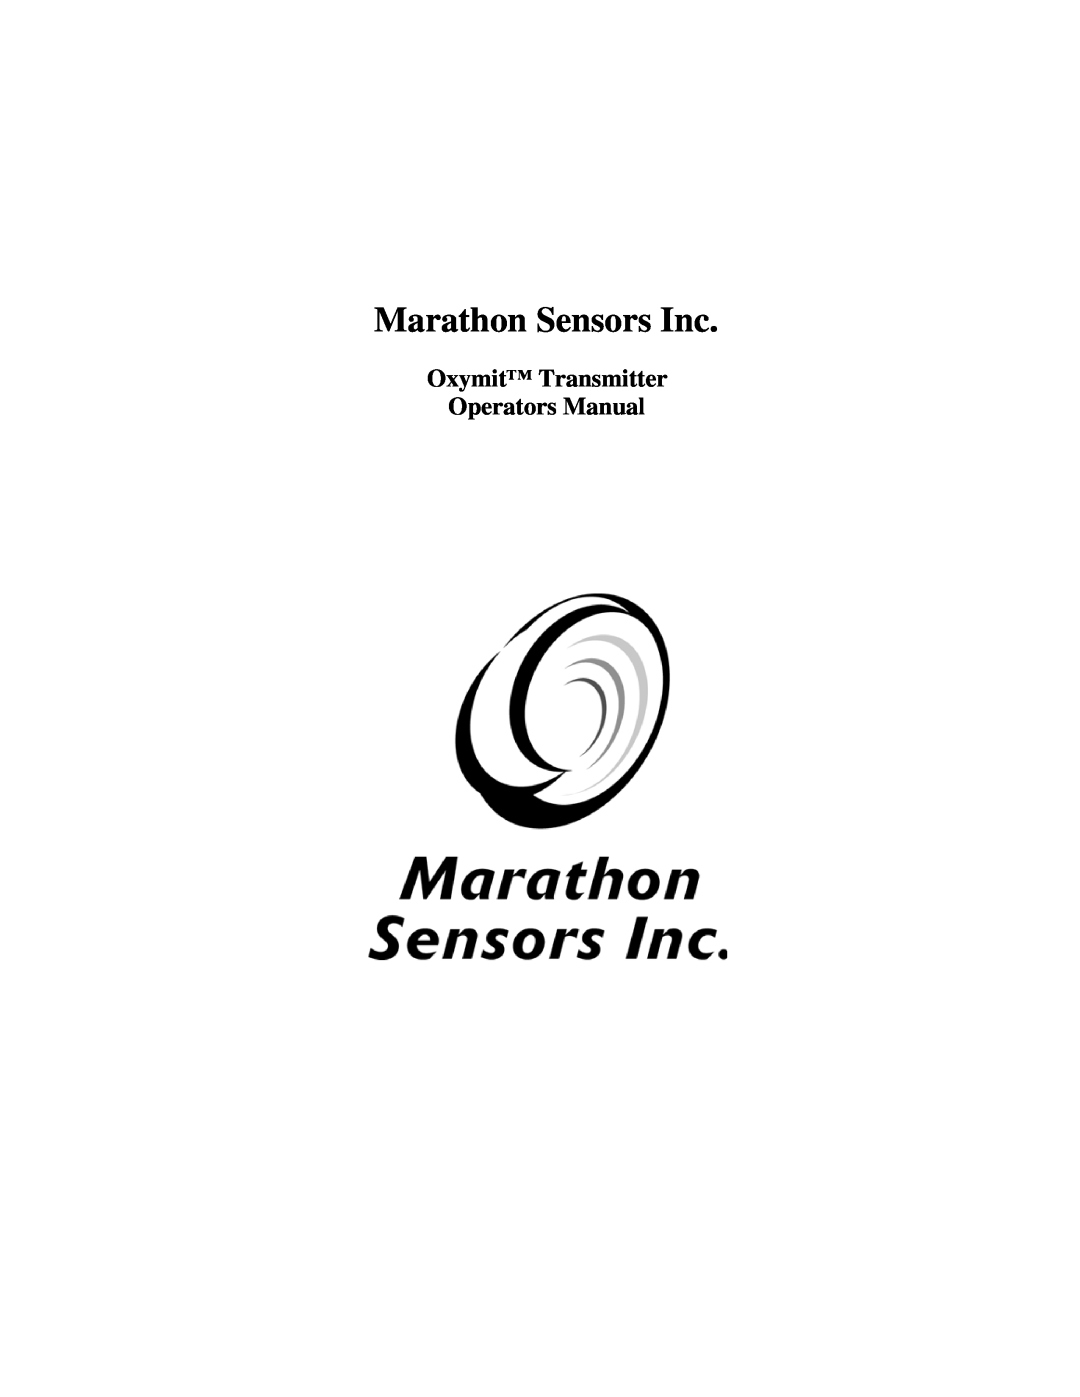 Marathon F200060 manual Oxymit Transmitter Operators Manual, Marathon Sensors Inc 